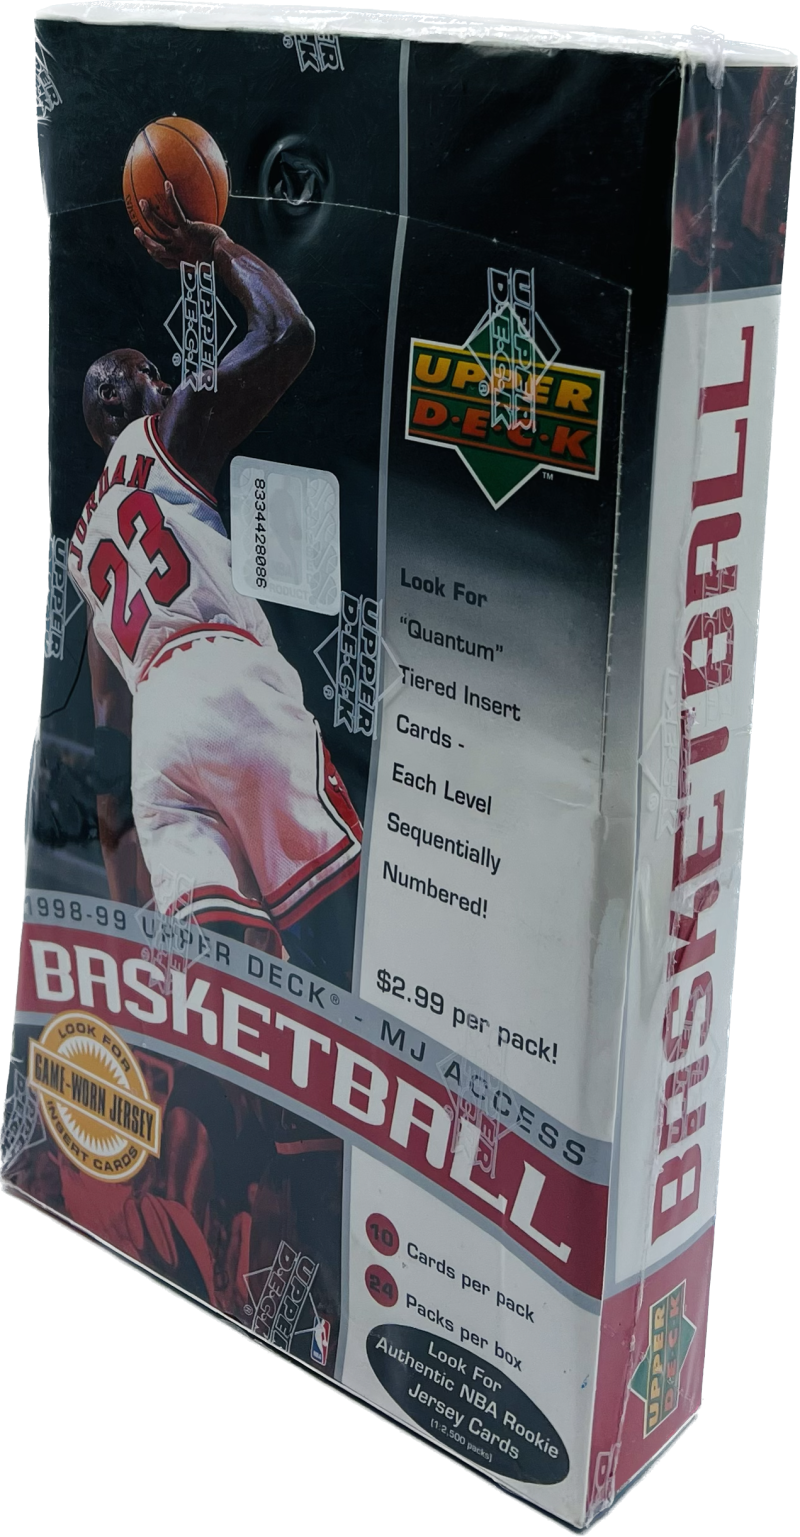 1998-99 Upper Deck MJ Access Basketball Box Image 4